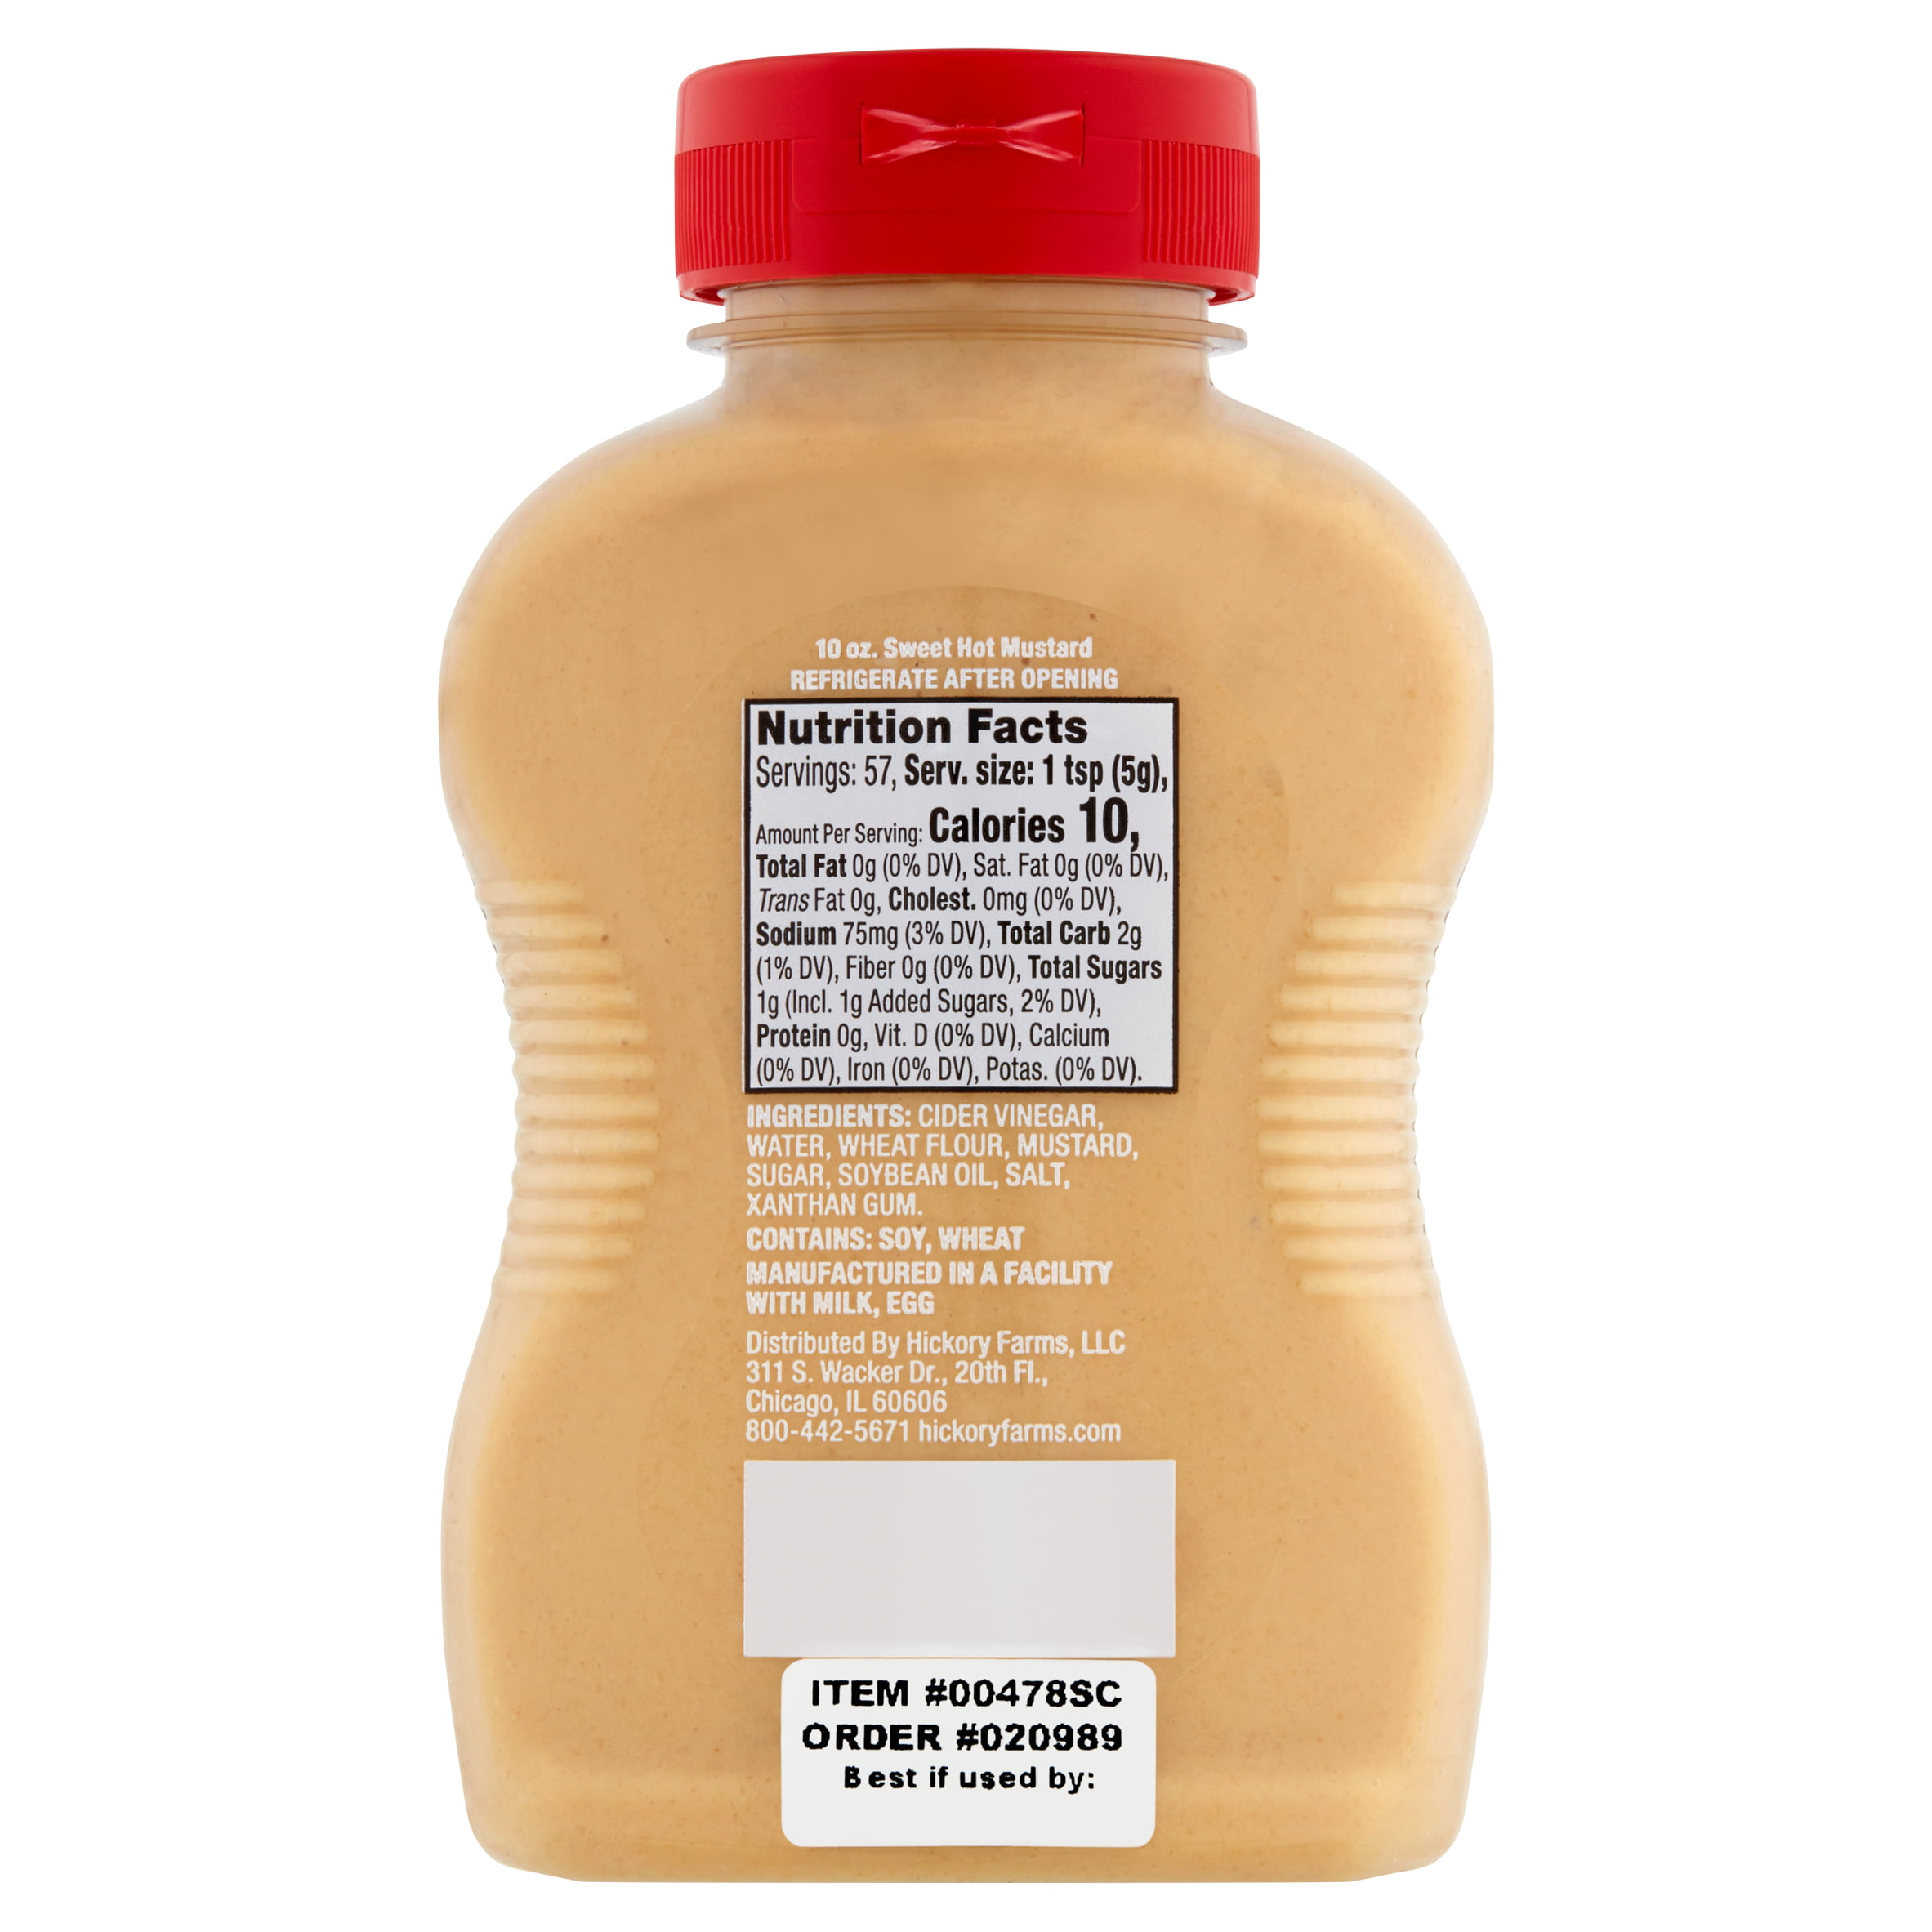 LOT OF 5 Hickory Farms Sweet Hot Mustard. 1.25 oz Jars. Exp. 7/13